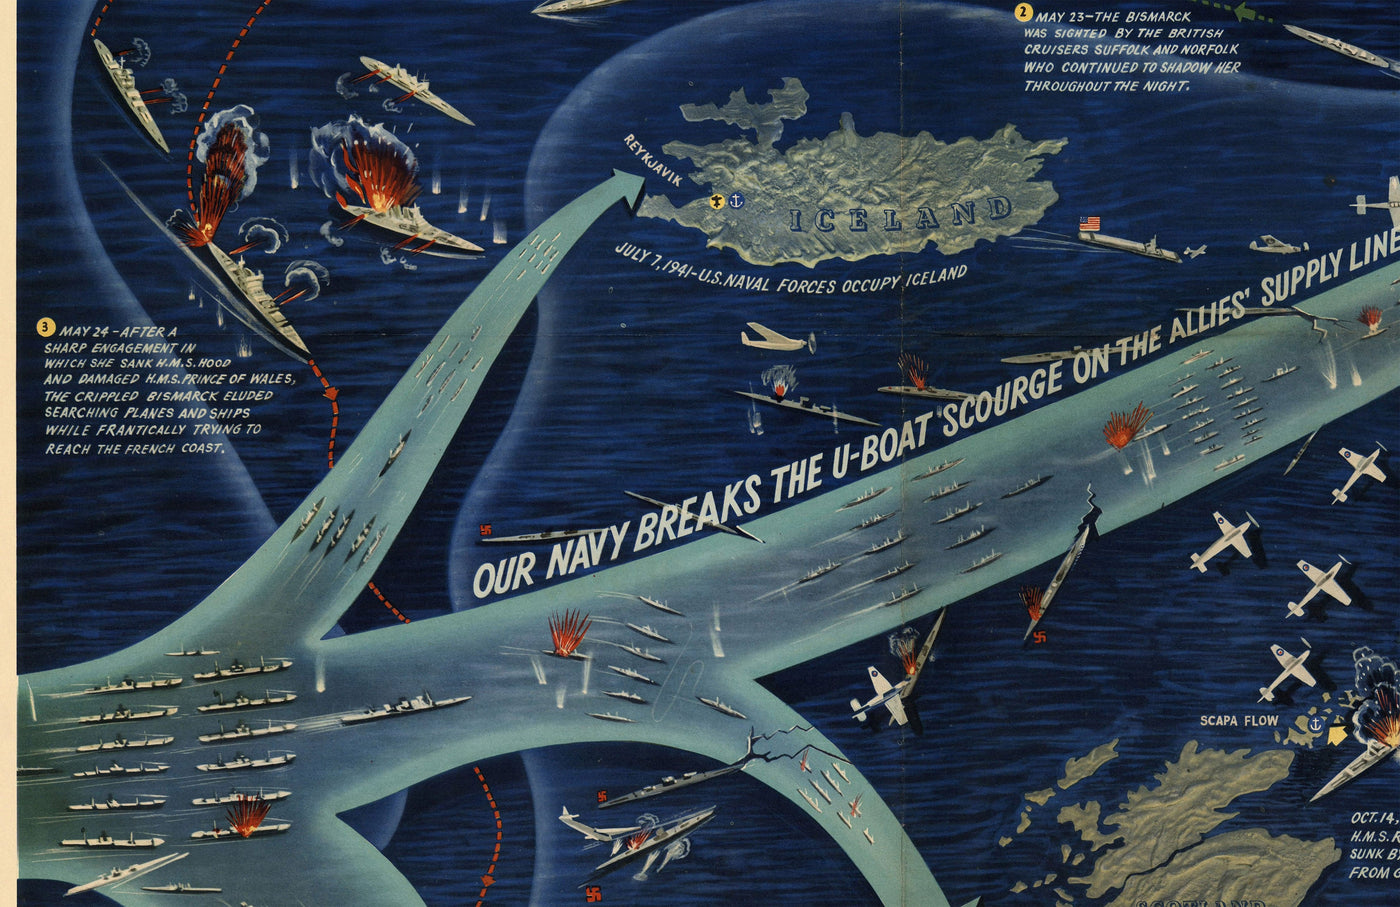 NAVWARMAP No. 3 - Old World War 2 Mapa, 1944 - Frente Occidental, Allies vs. Nazi - EE. UU. Marina Educativa y Propaganda Mapa